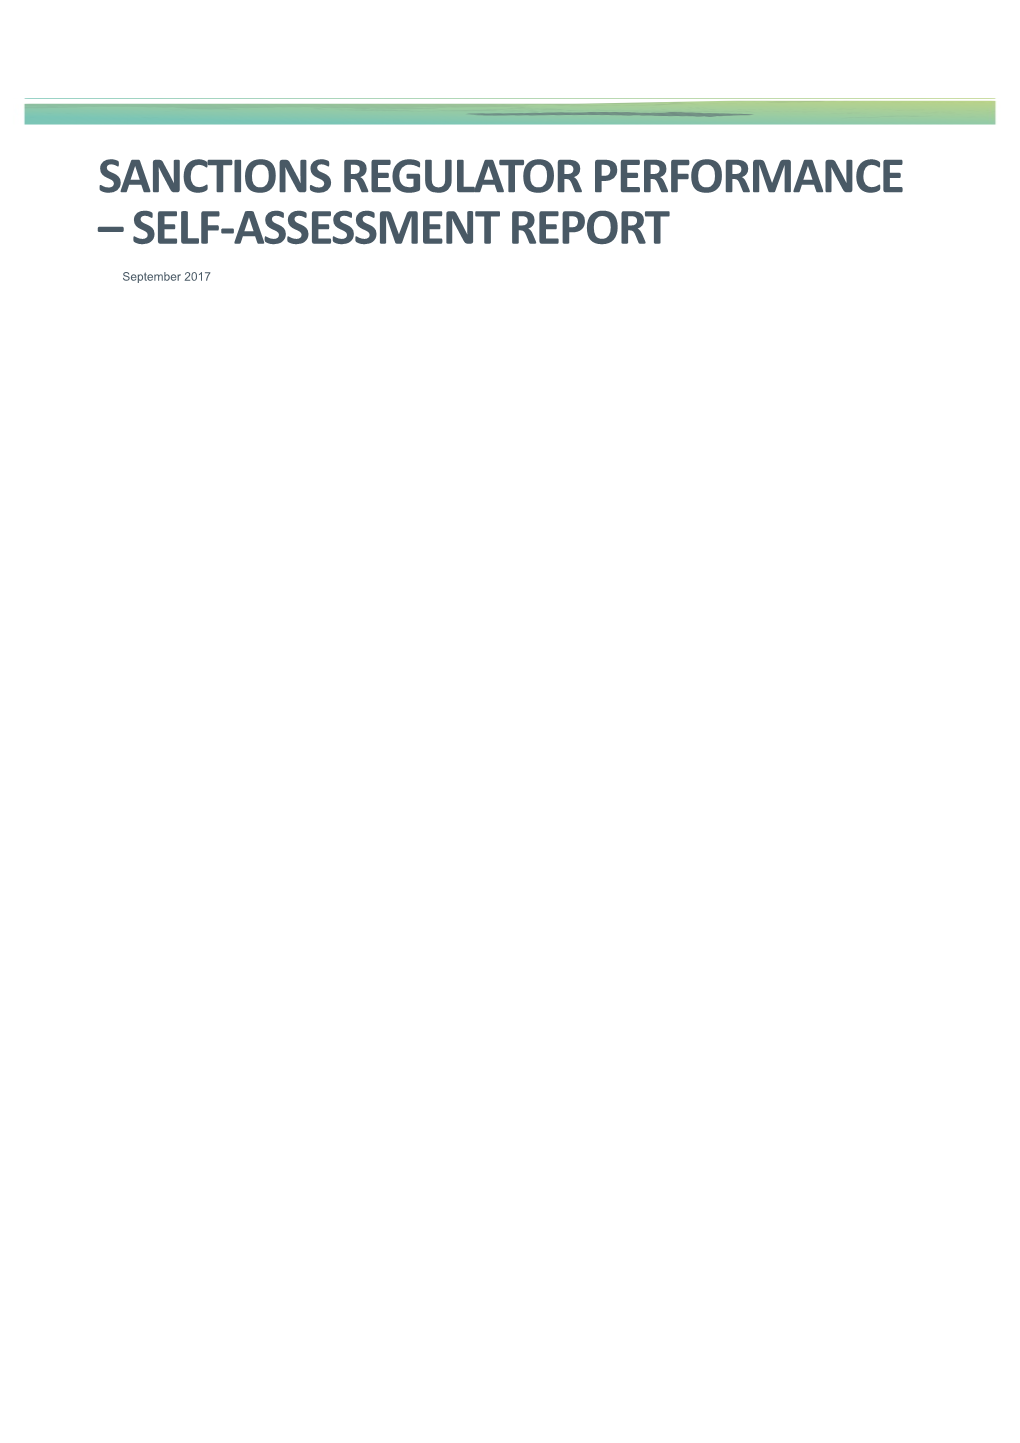 Sanctions Regulator Performance Self-Assessment Report